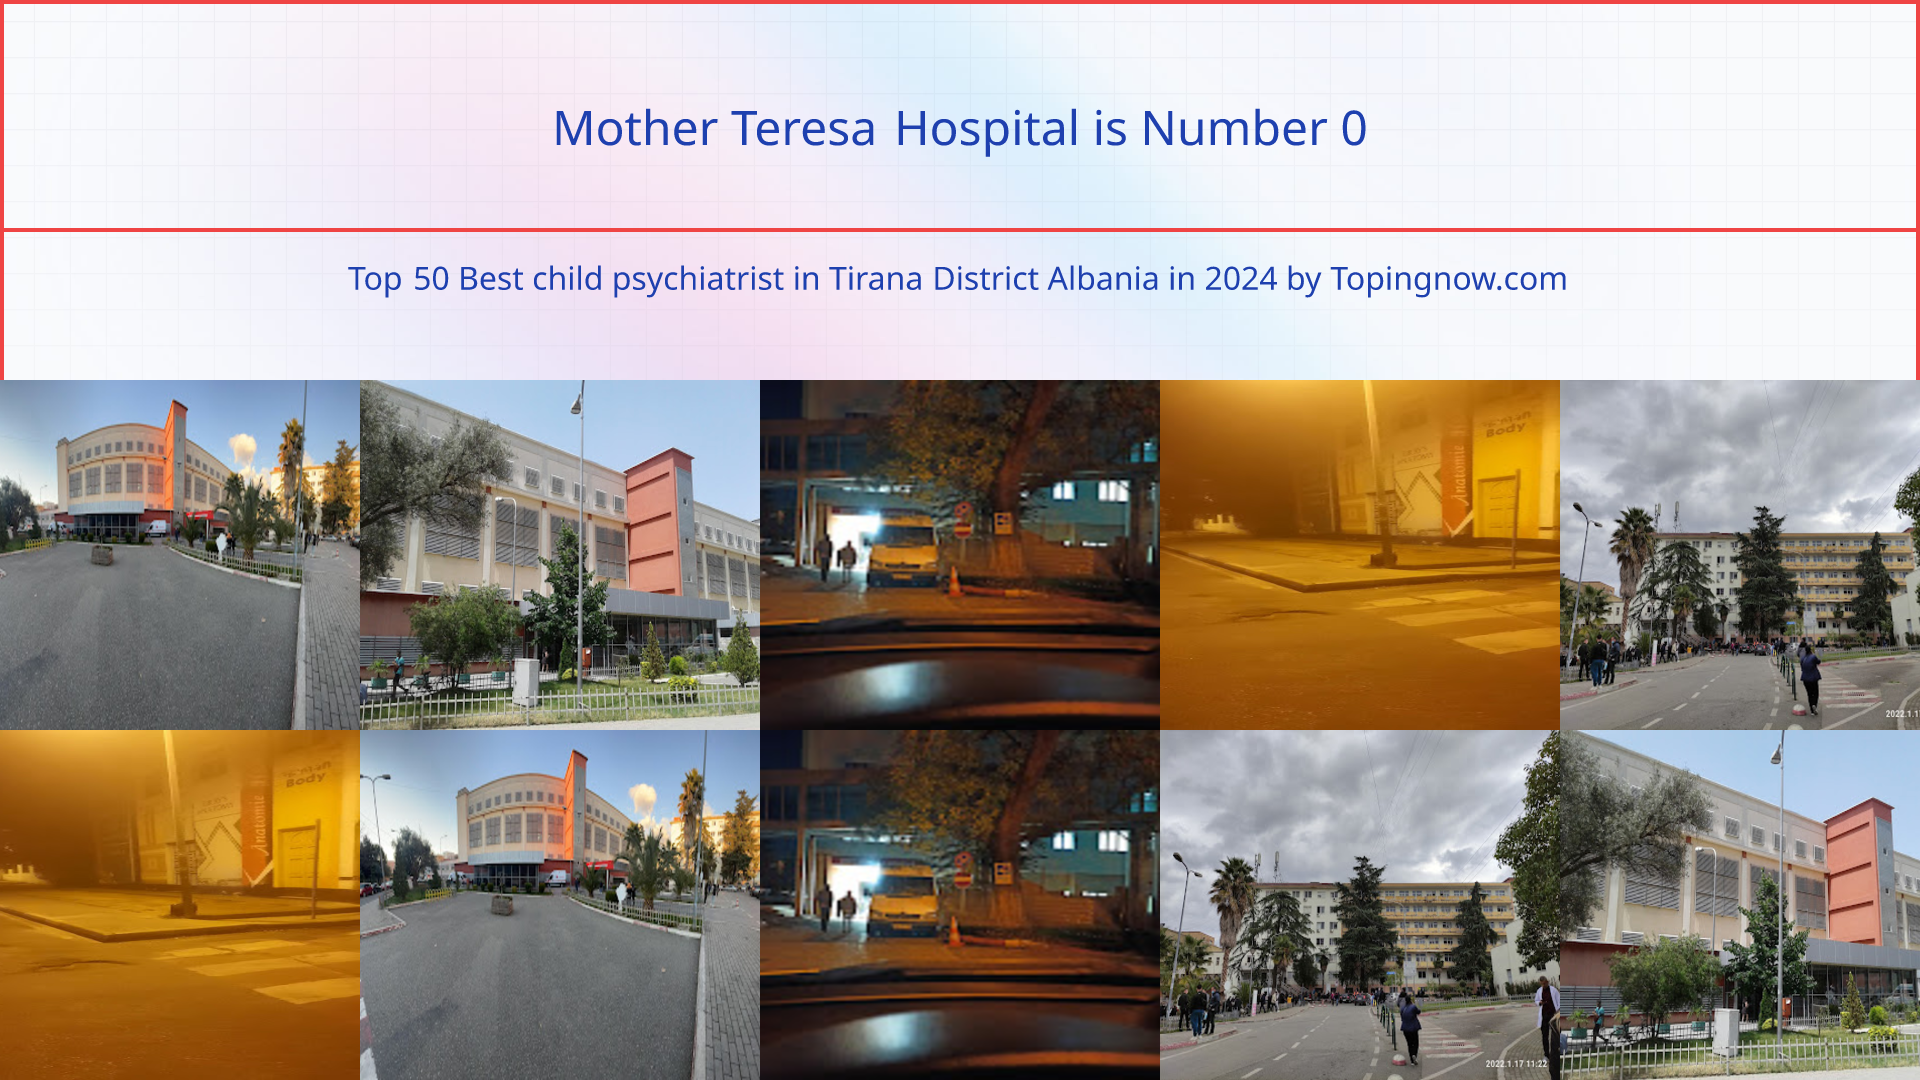 Mother Teresa Hospital: Top 50 Best child psychiatrist in Tirana District Albania in 2024